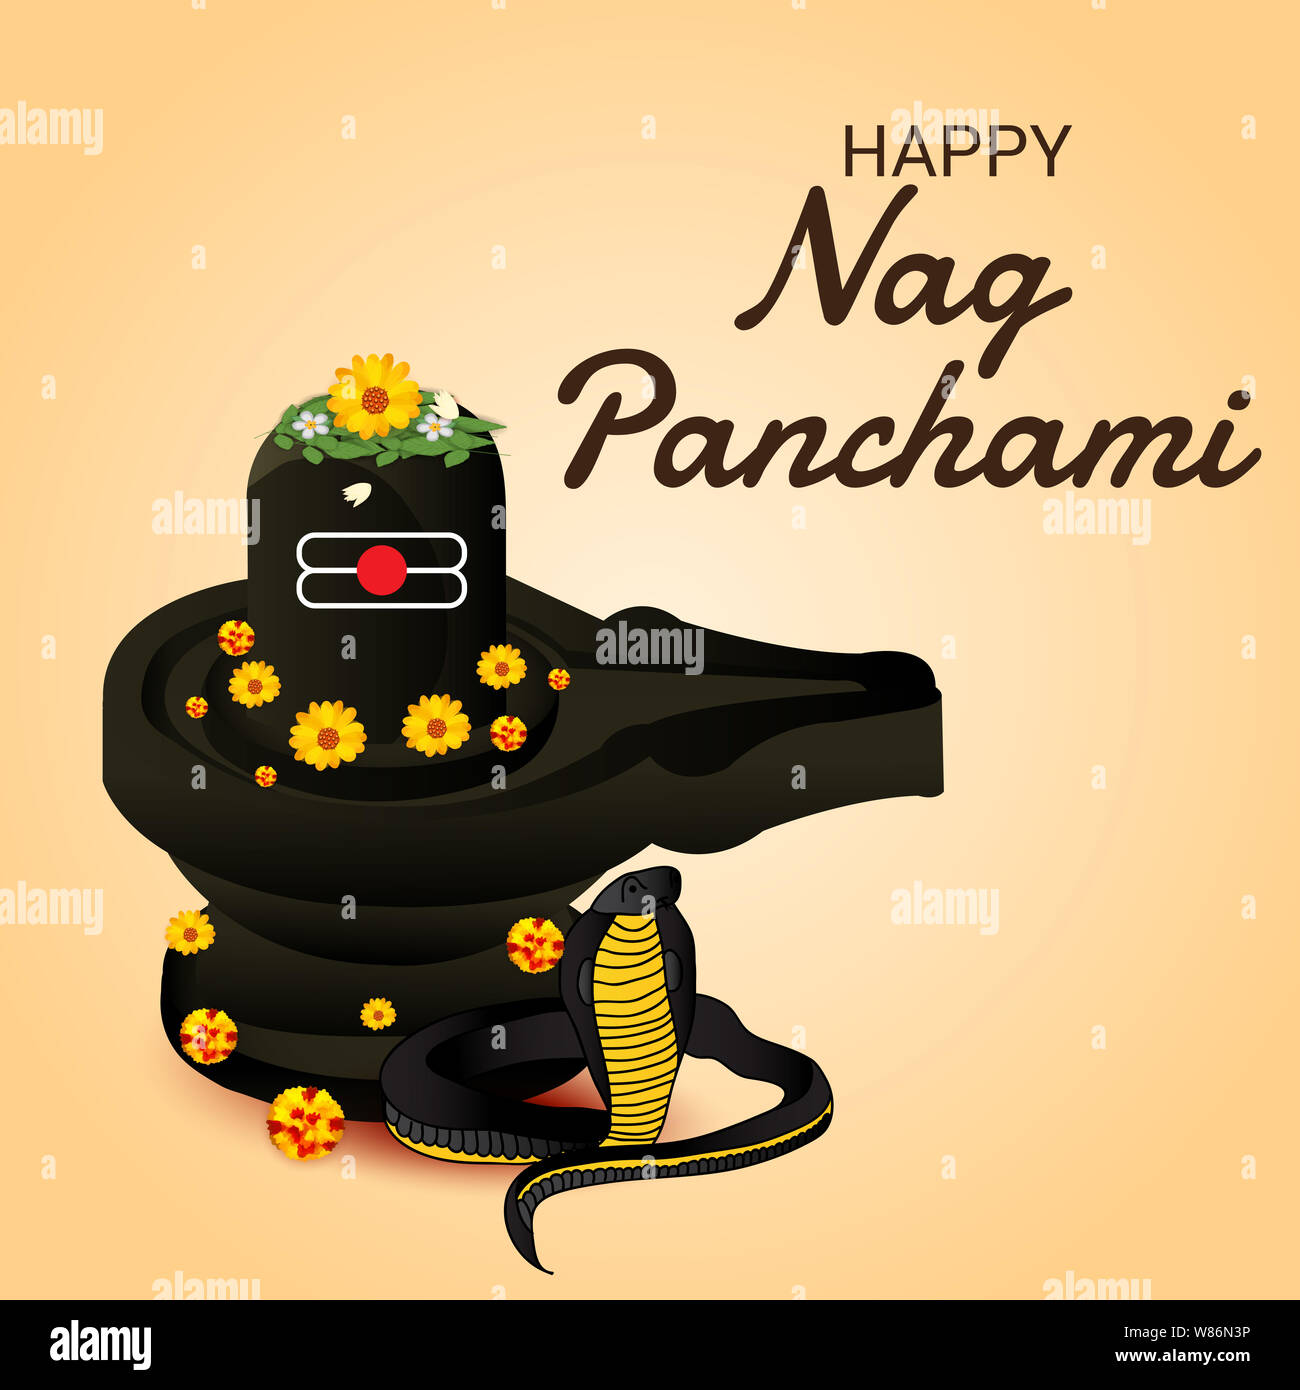 Happy Nag Panchami 2022 Wishes Images, Pics, Quotes - Best Status Pics